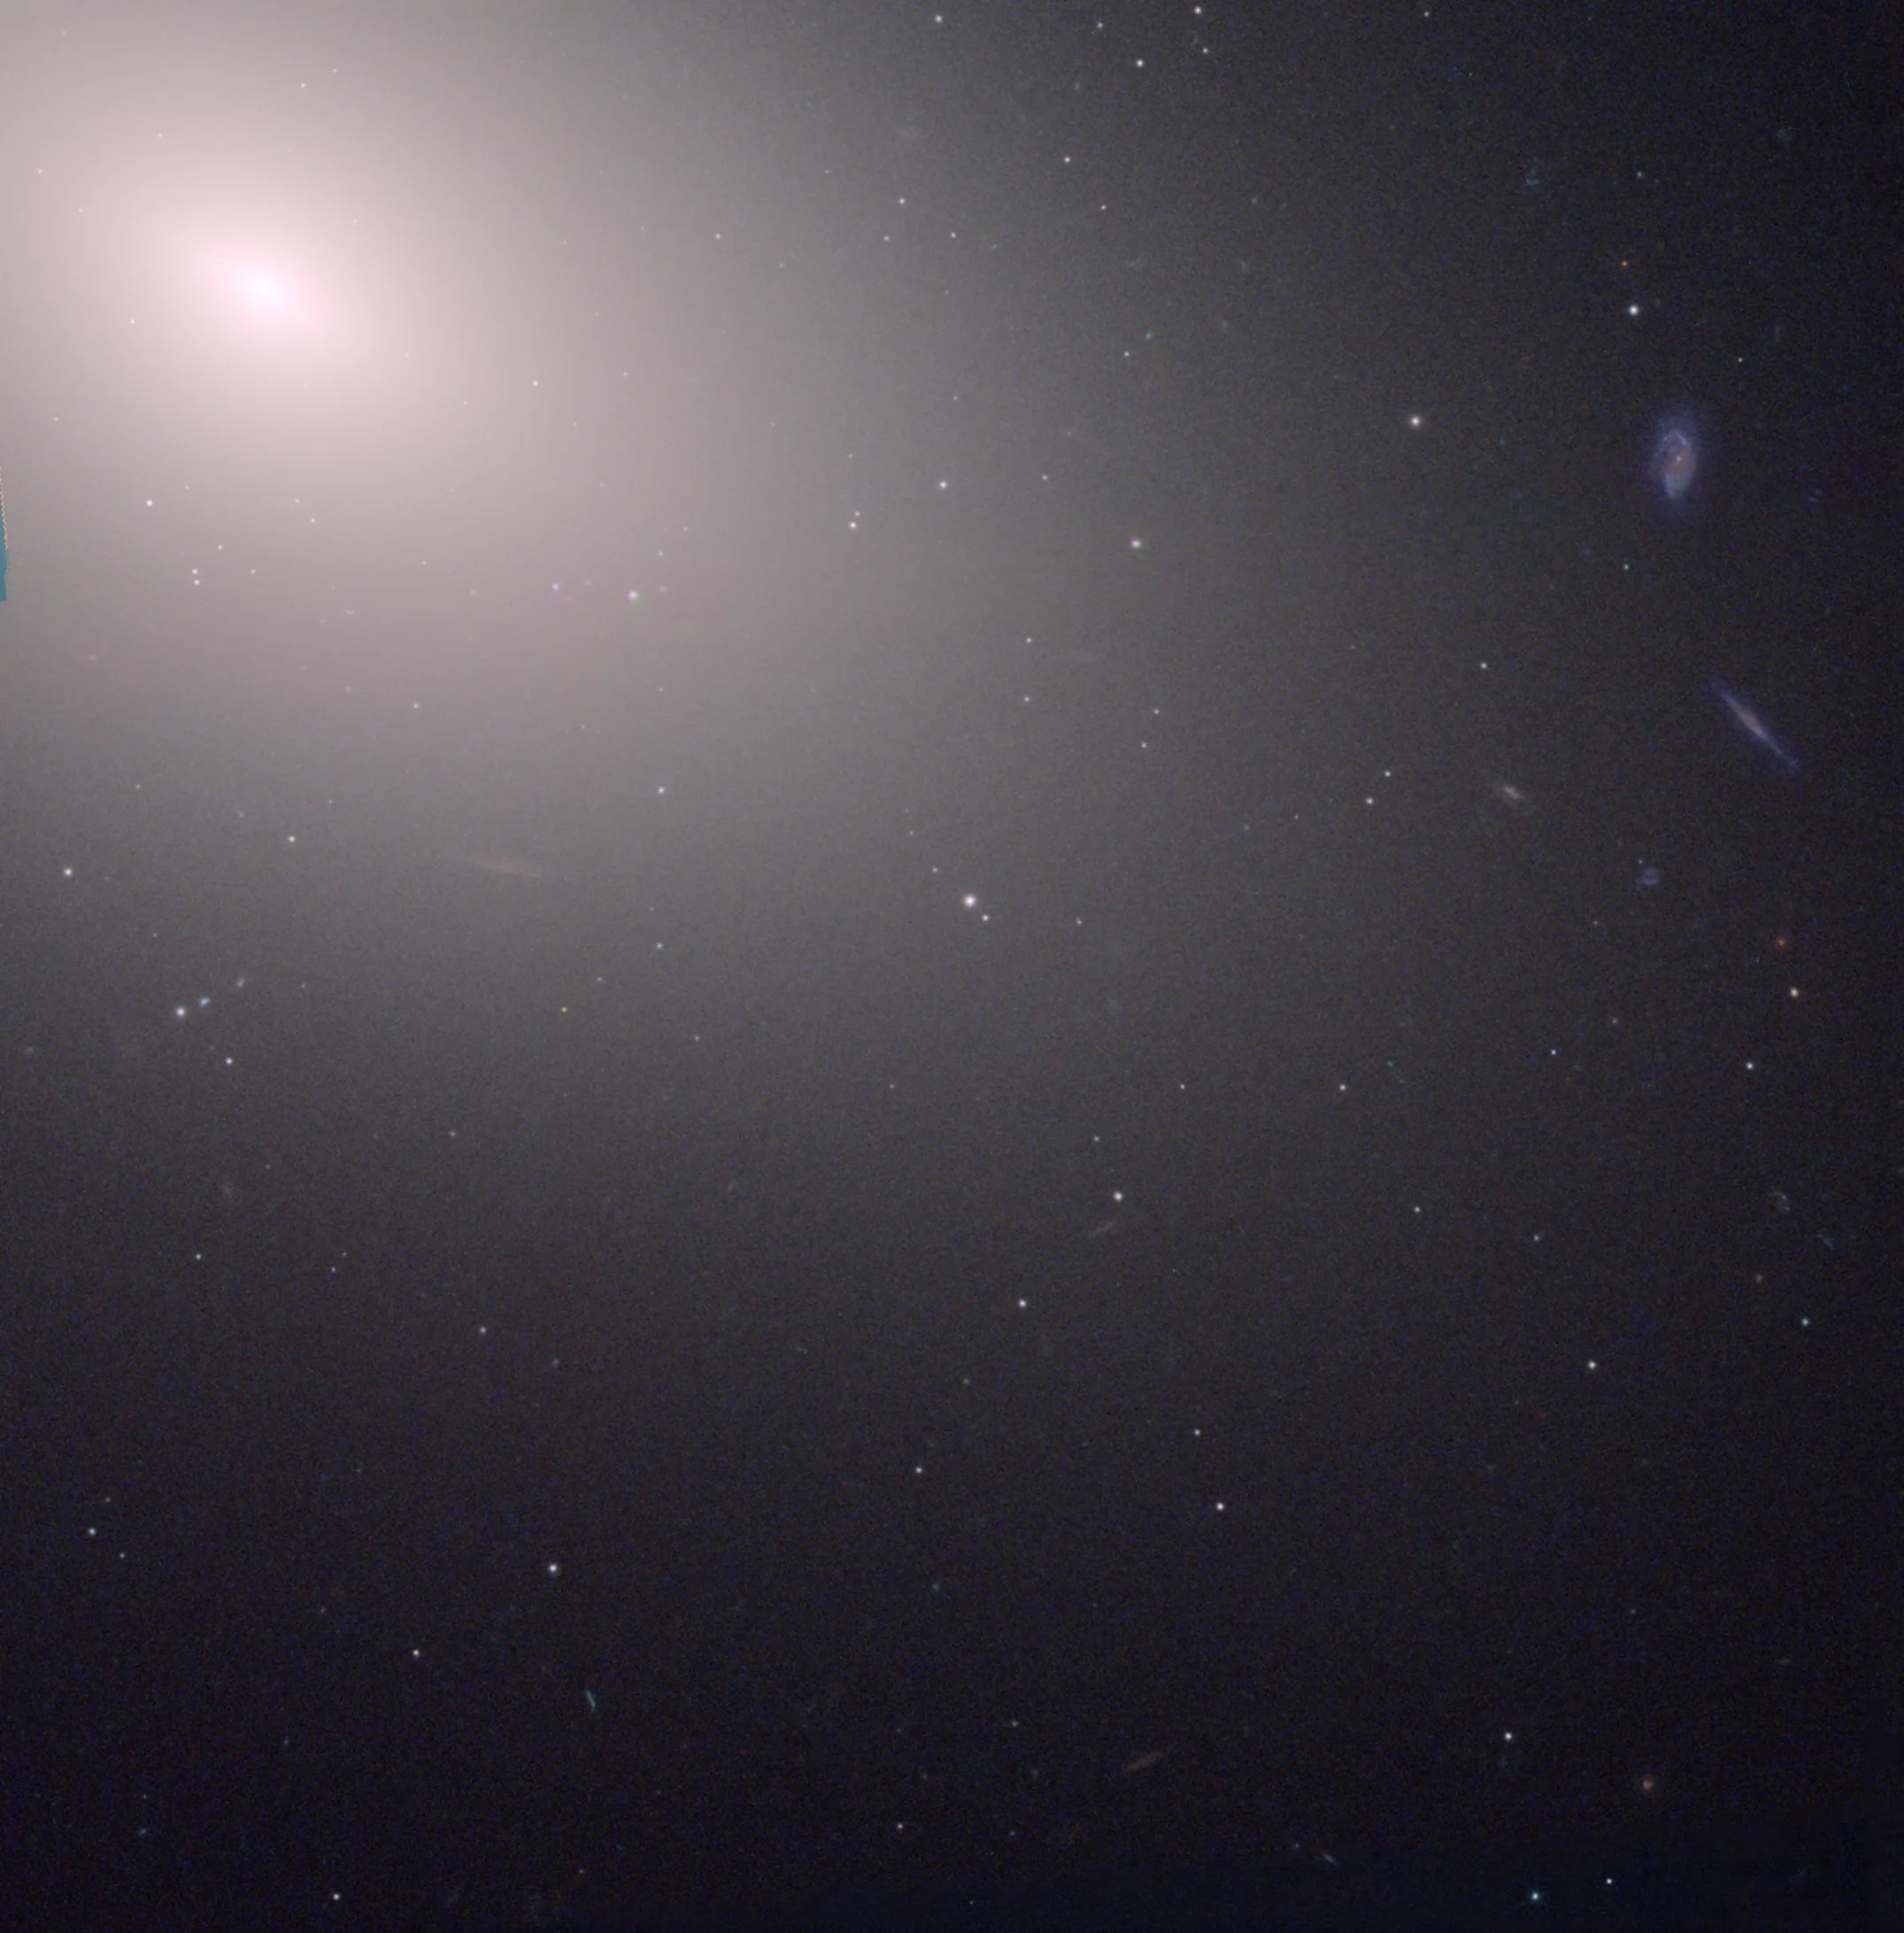 Hubble image of M59